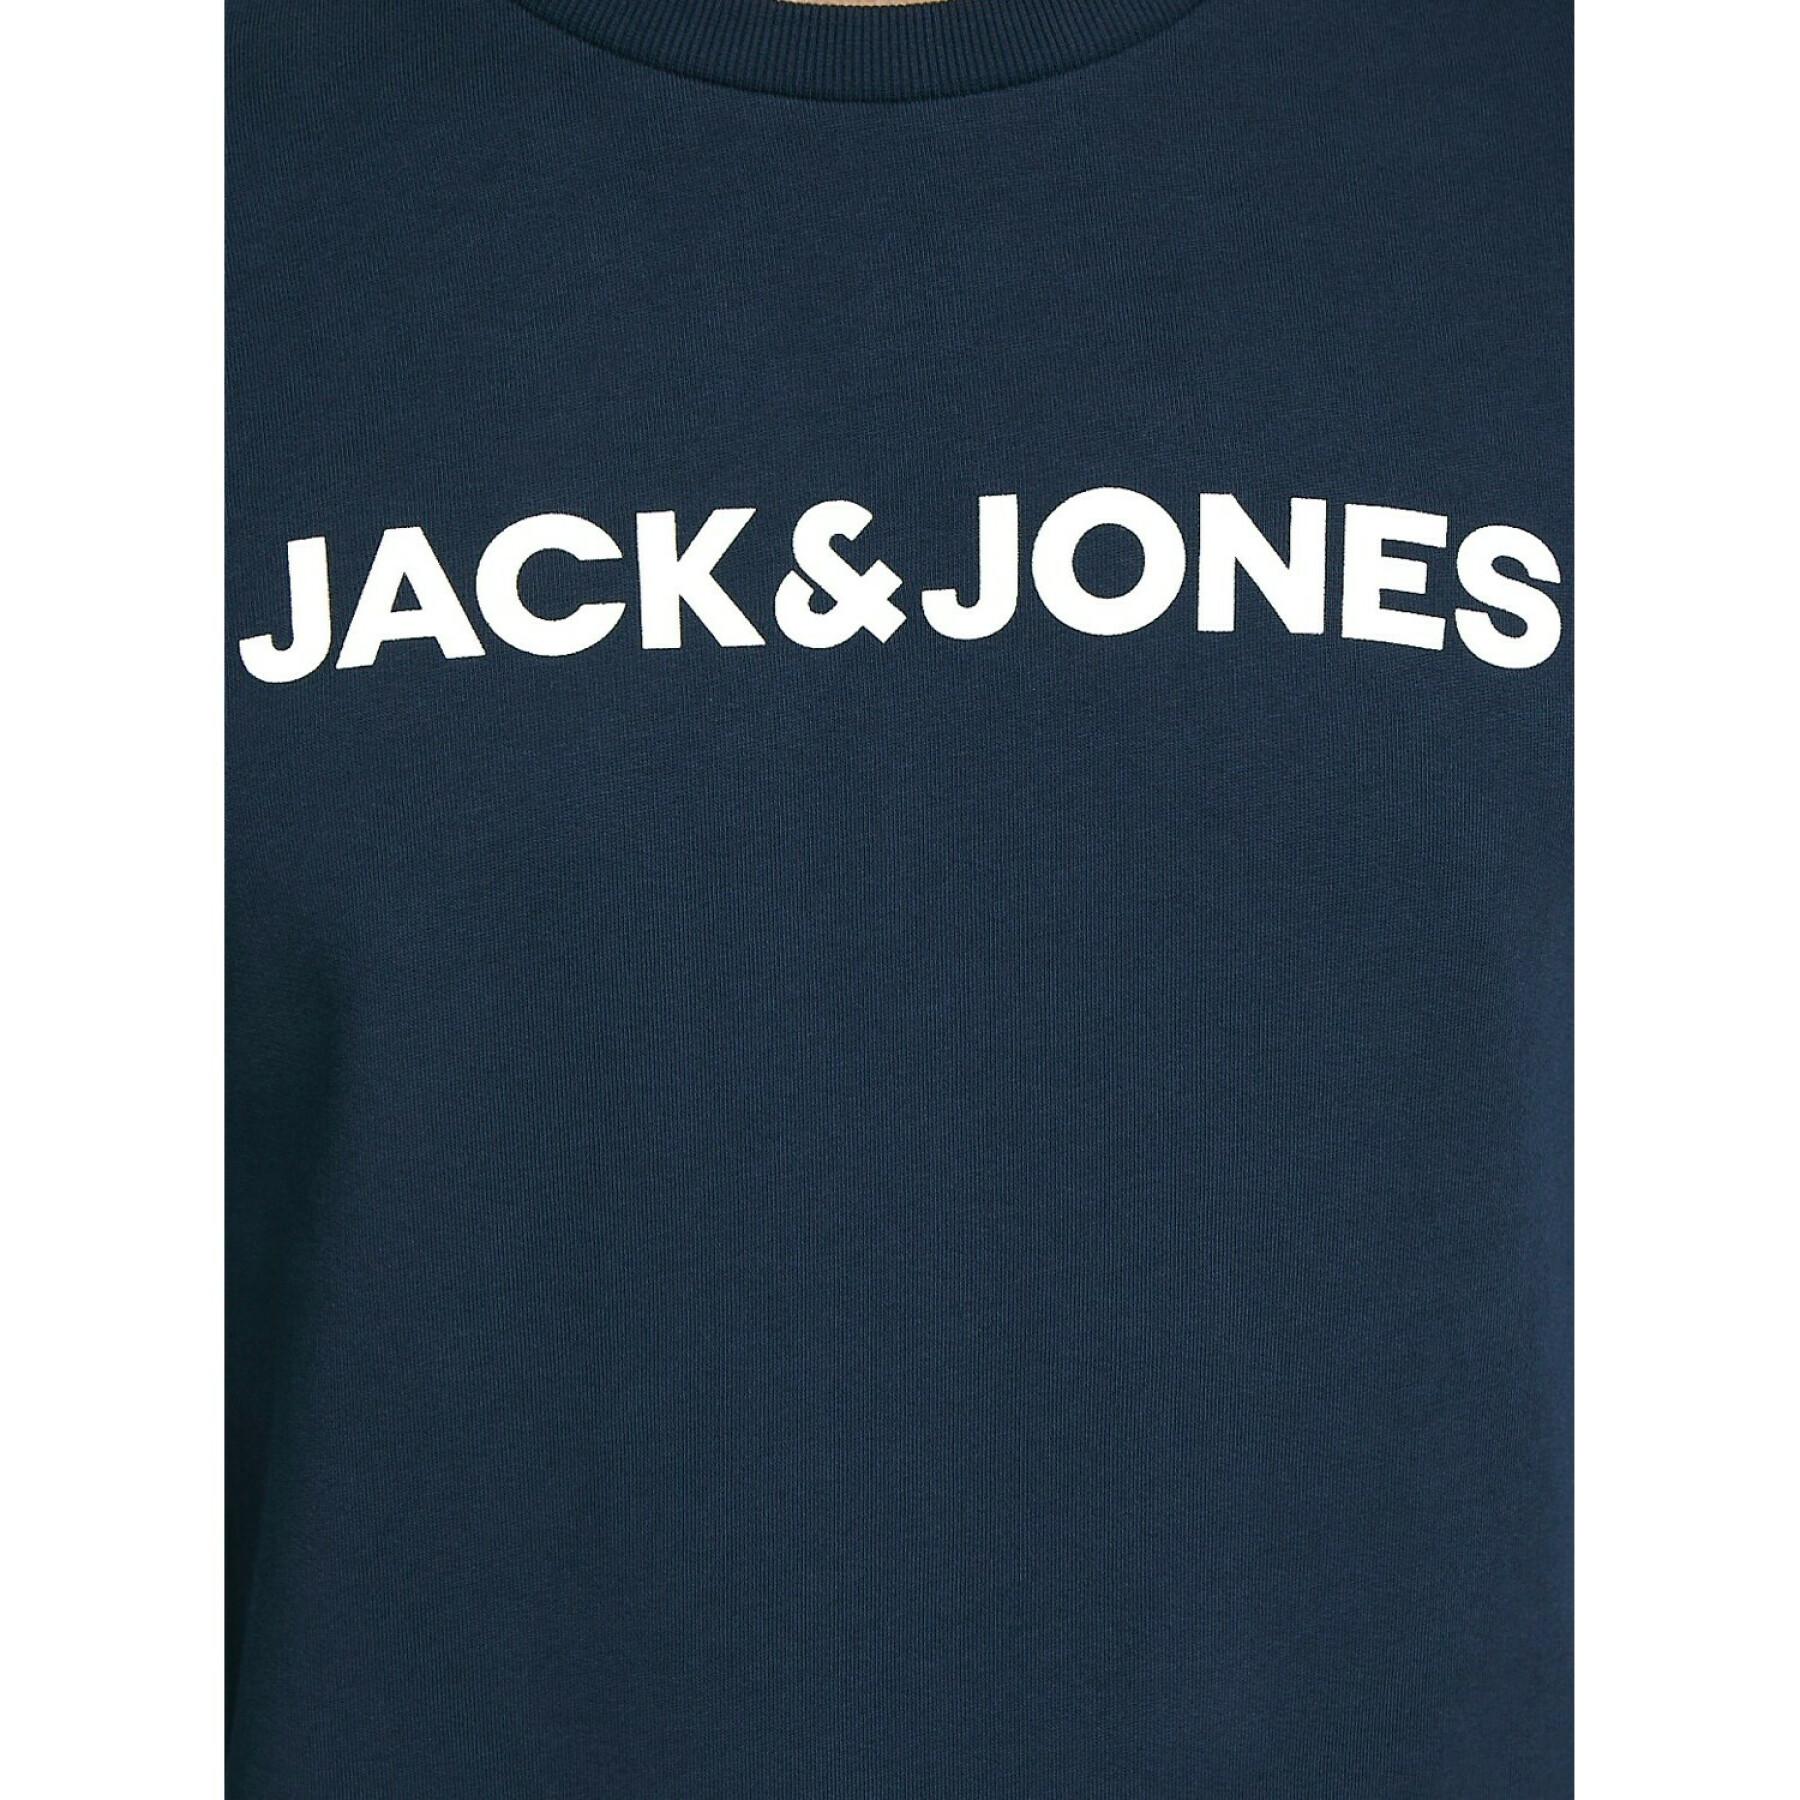 Chándal Jack & Jones Lounge